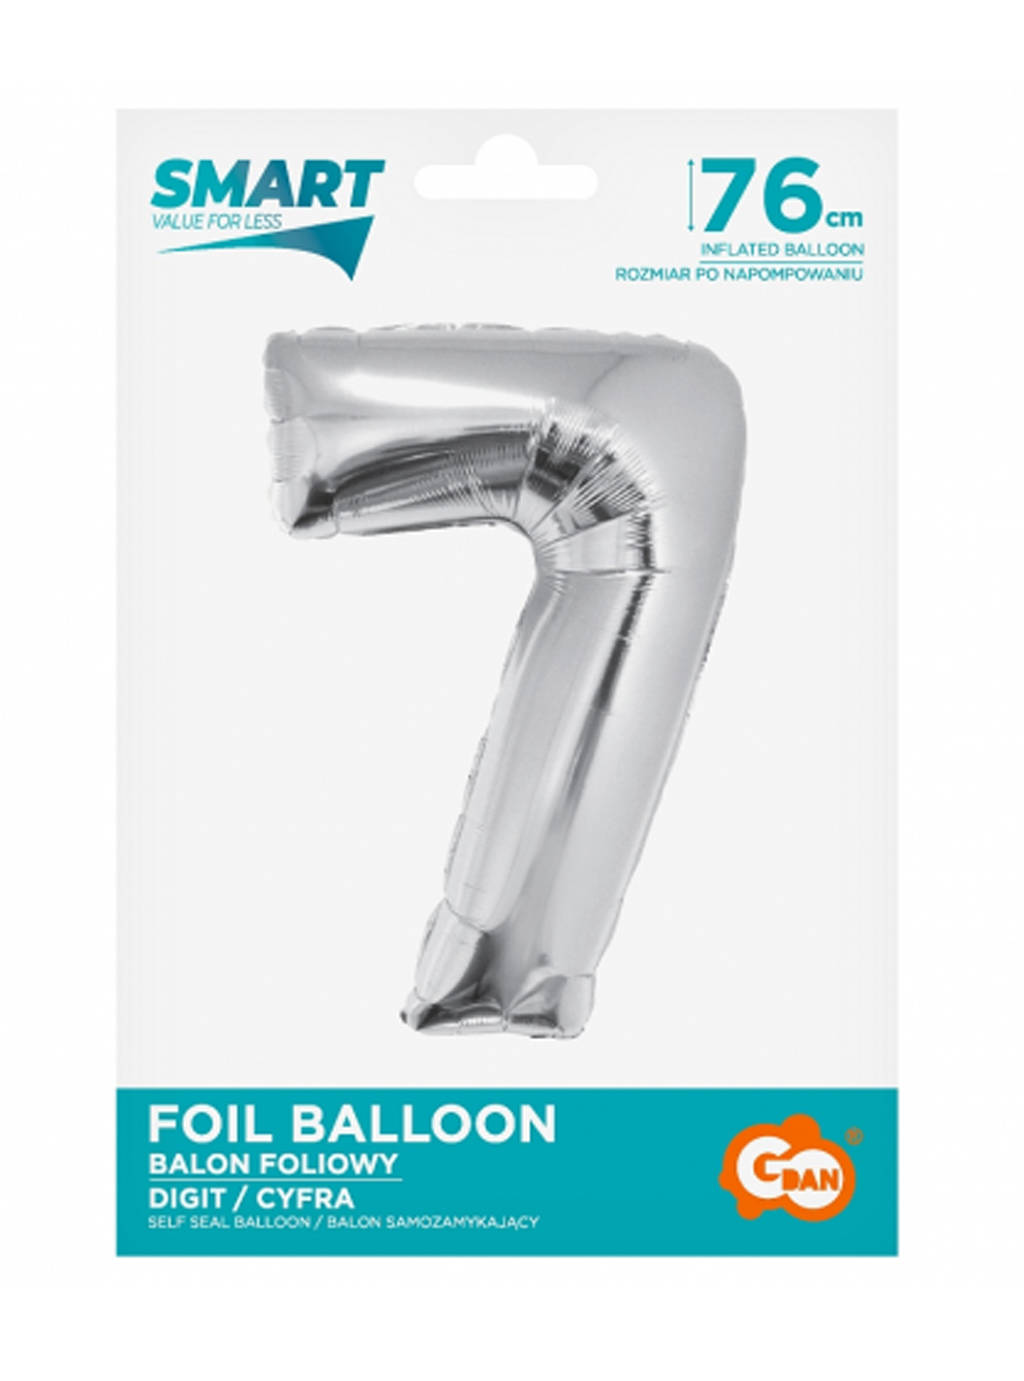 Stříbrný chytrý balónek s číslem "7" -76 cm